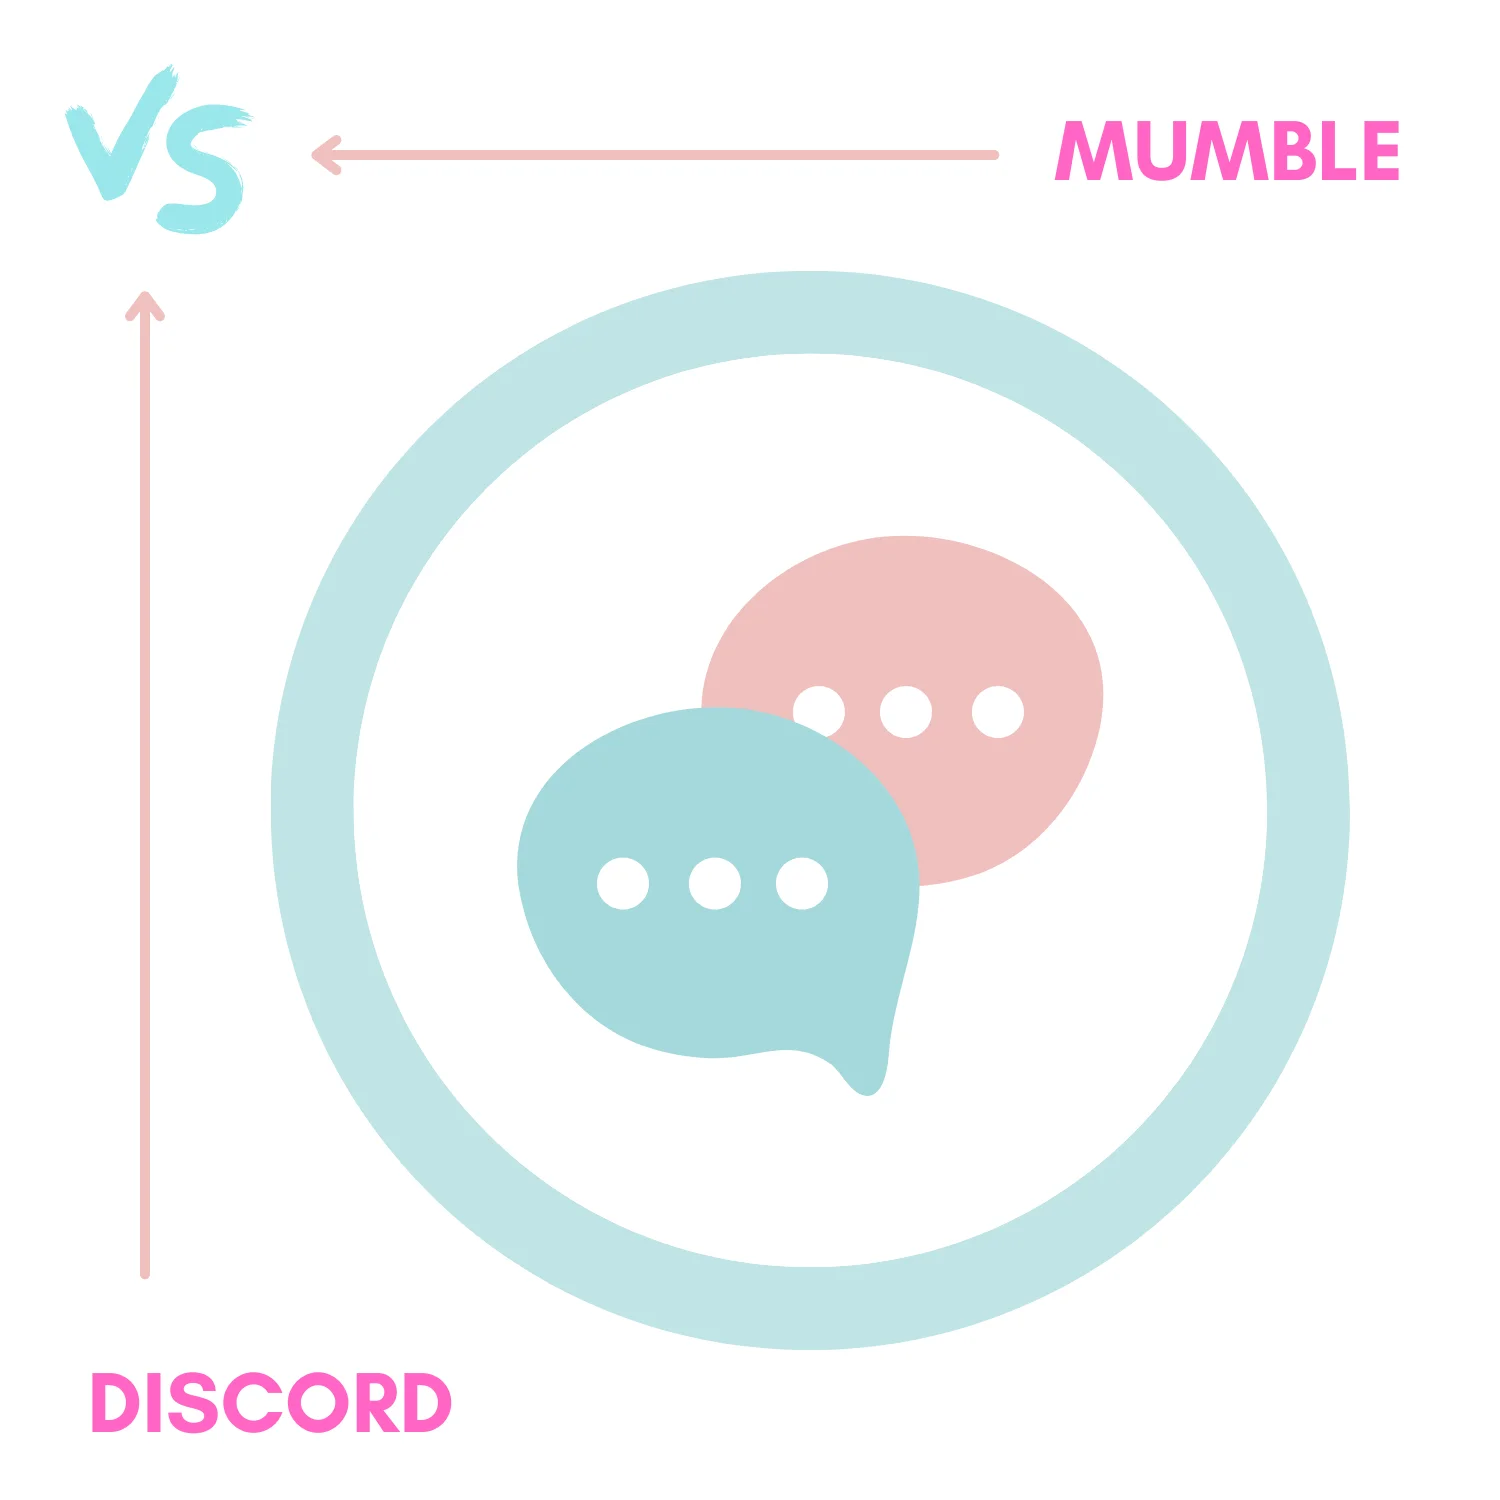 Mumble vs Discord